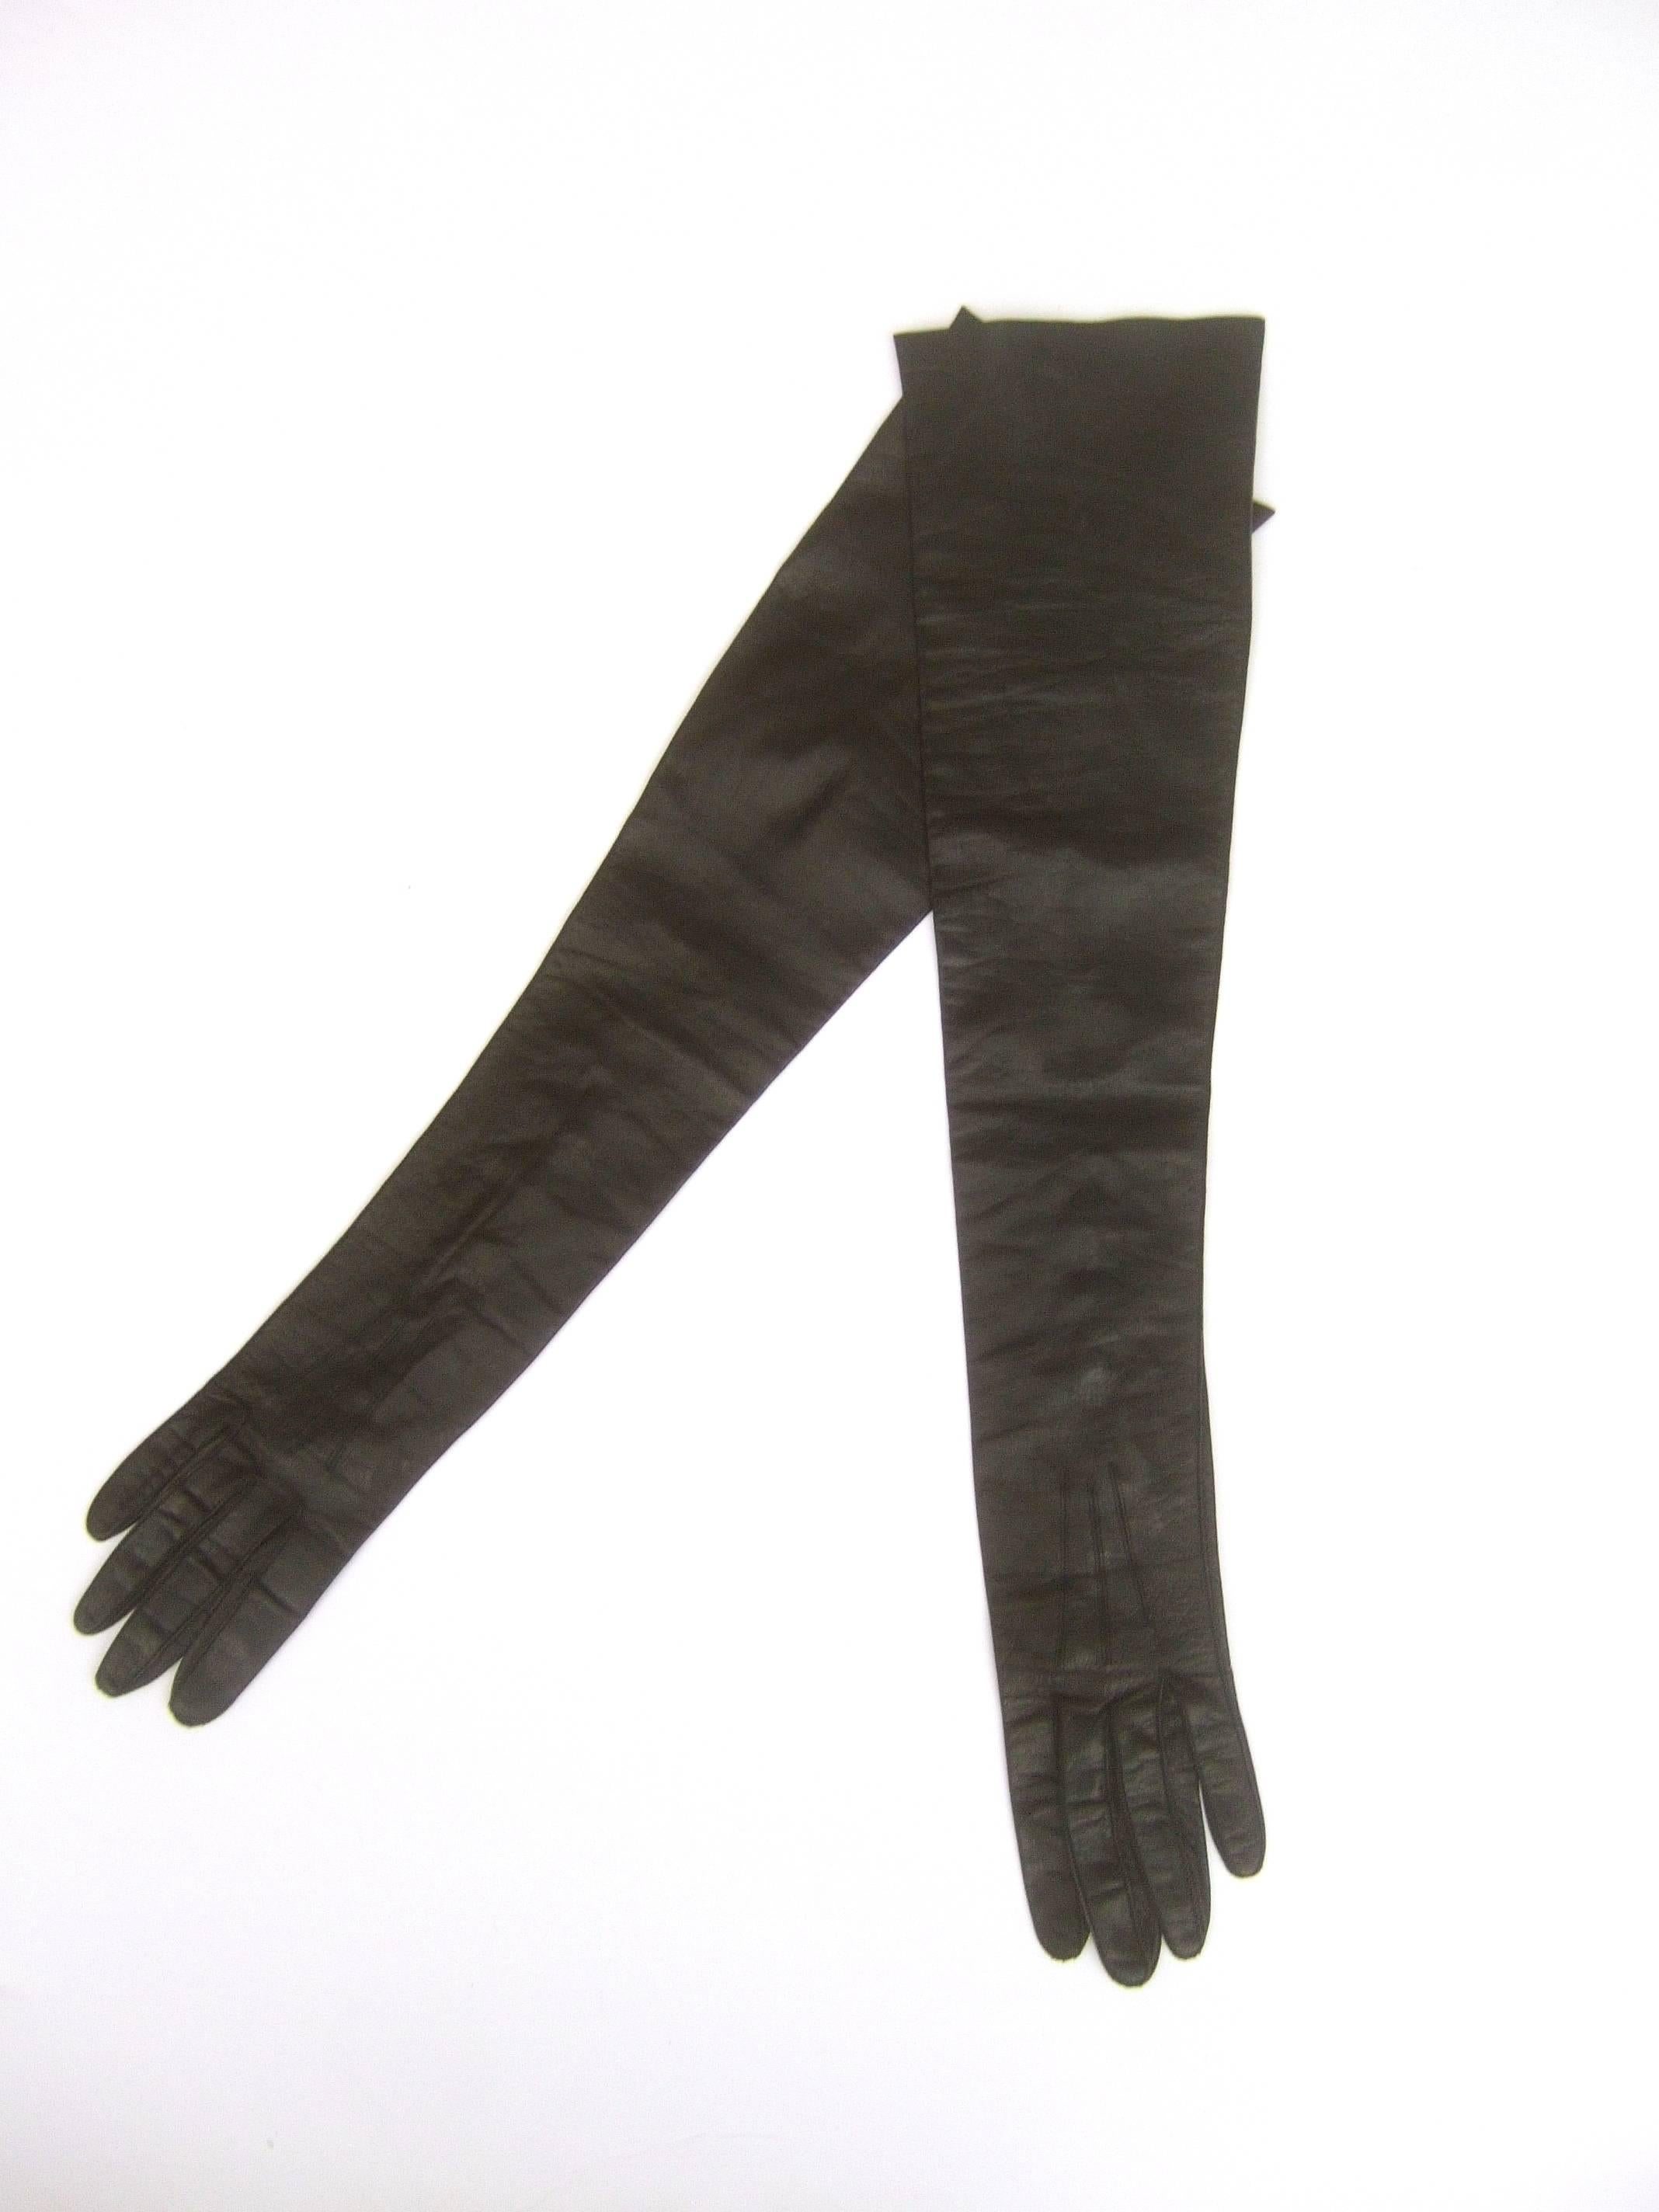 Black Sleek Ebony Opera Length Kid Skin Leather Gloves c 1970s